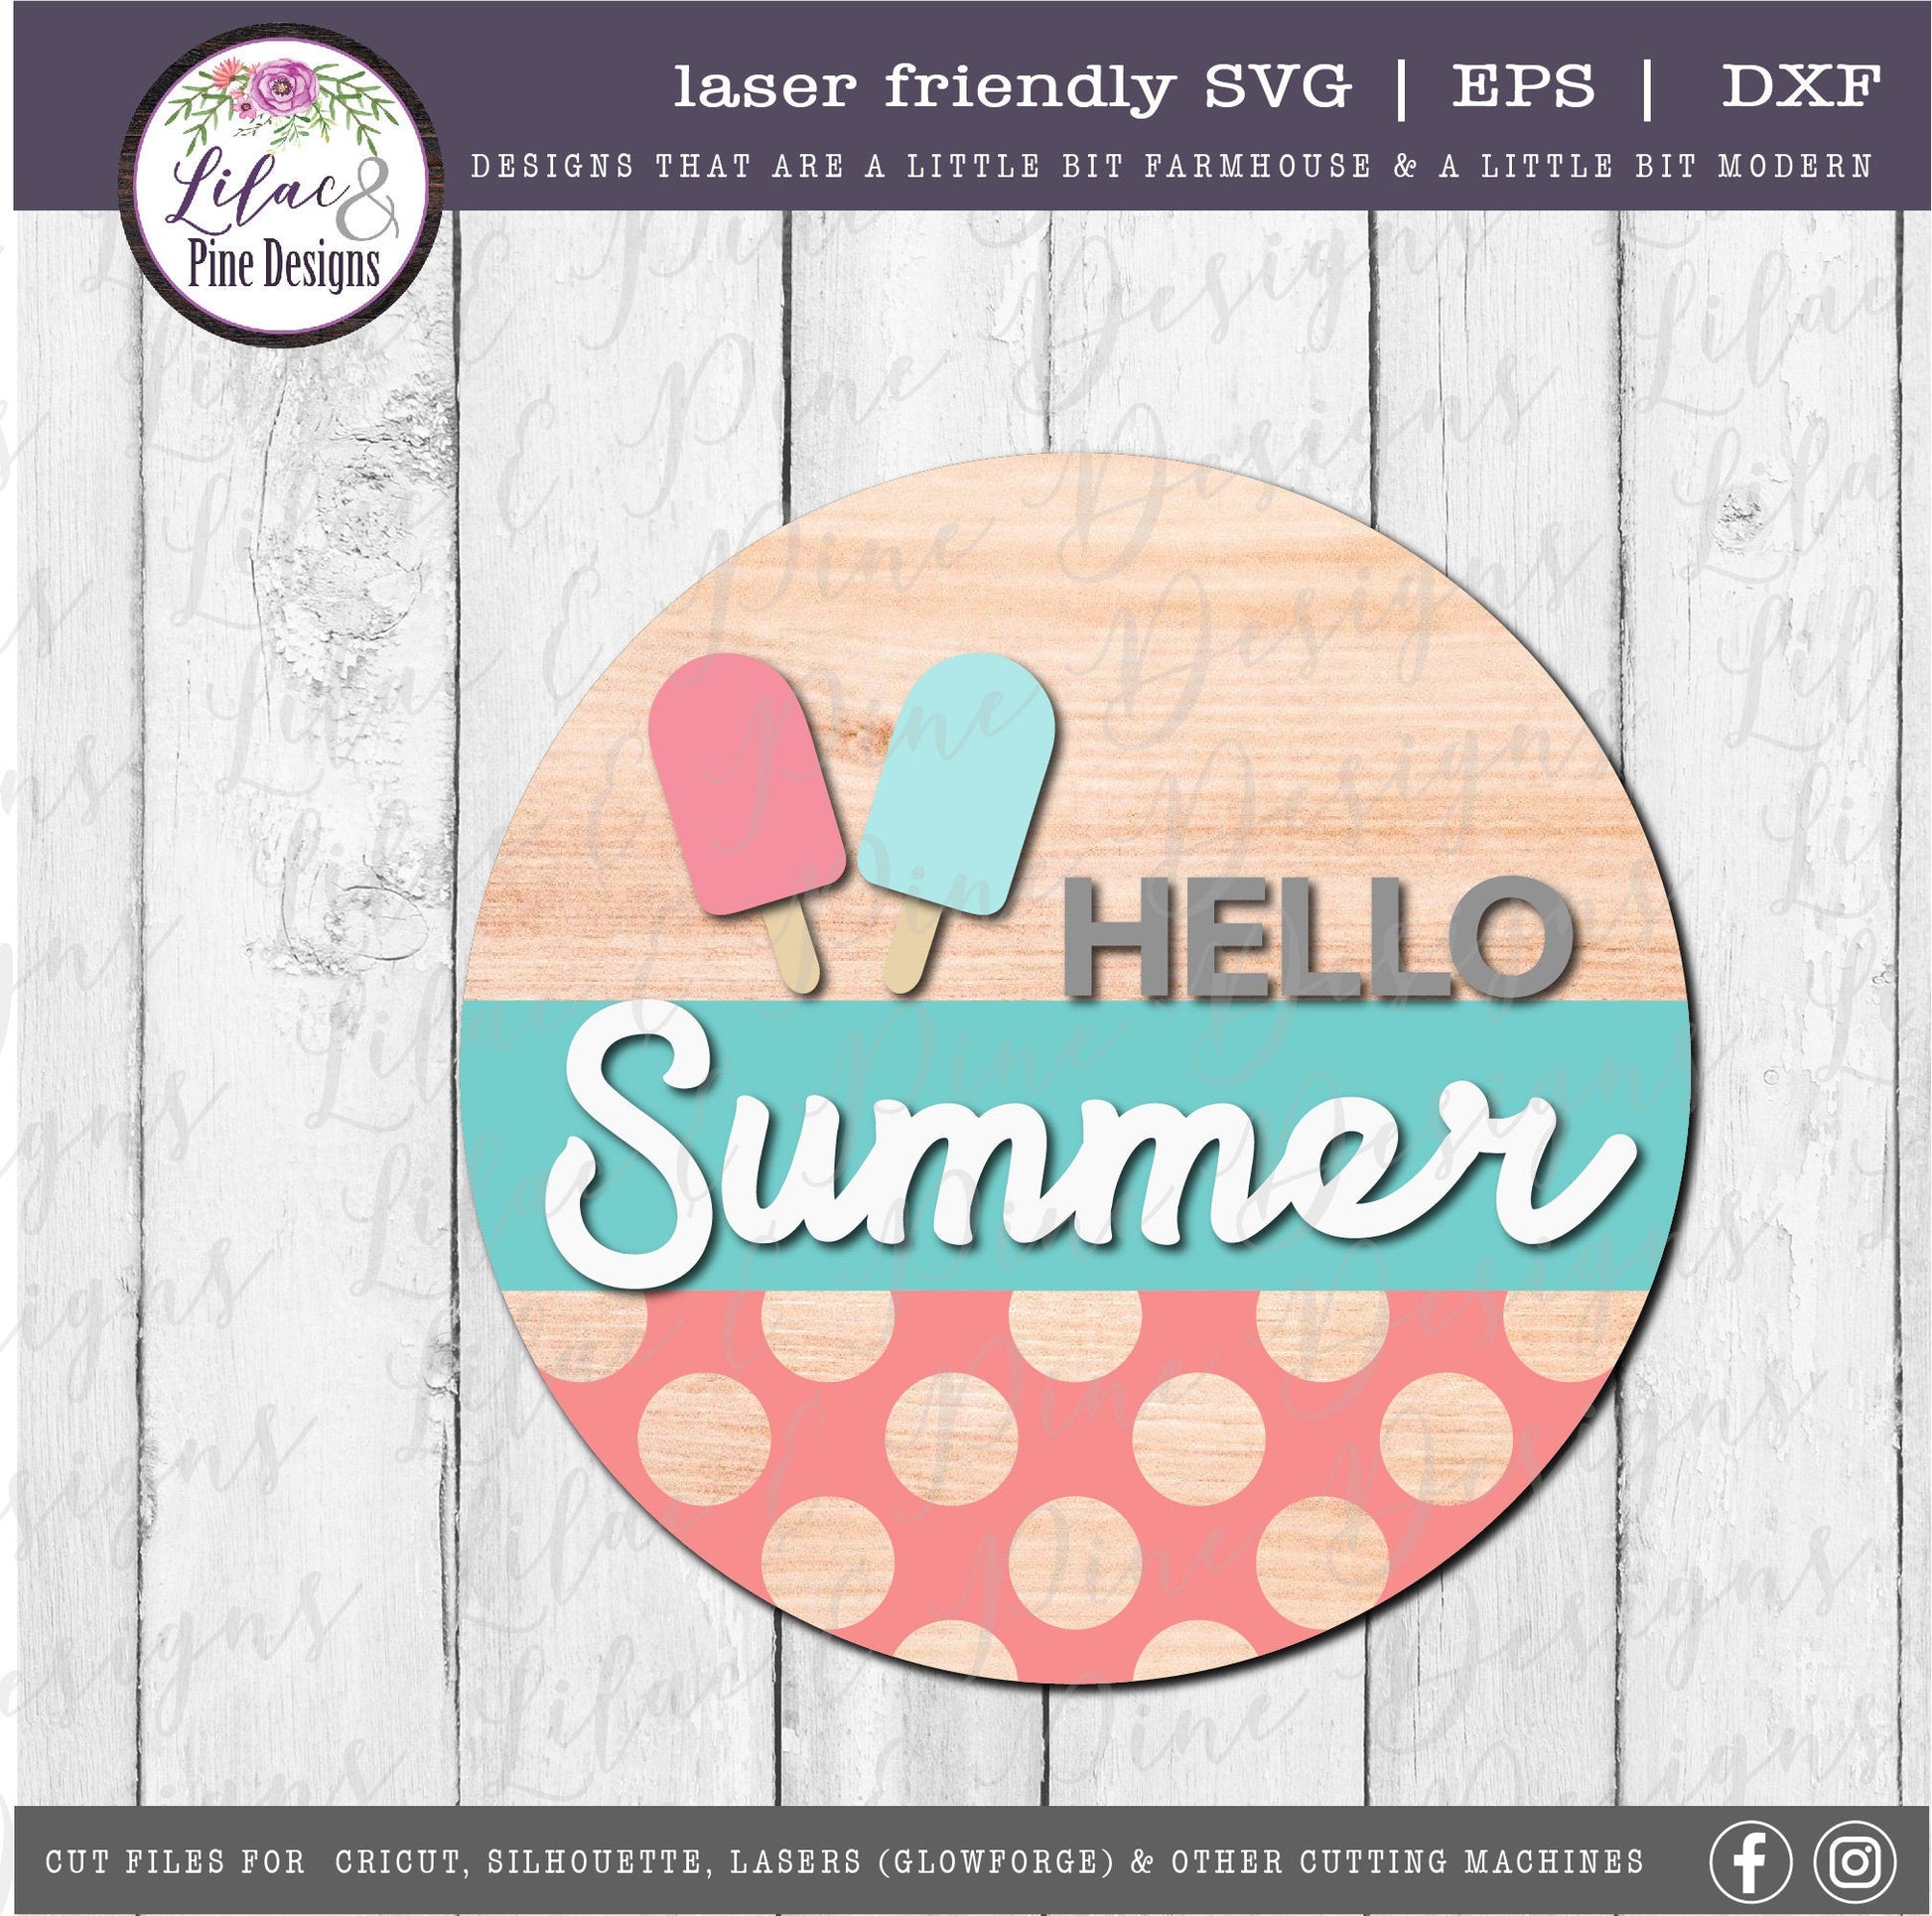 Hello Summer popsicle round sign, summer door decor SVG, ice cream SVG, summer porch decor svg, Cricut SVG, Glowforge Svg, laser cut file